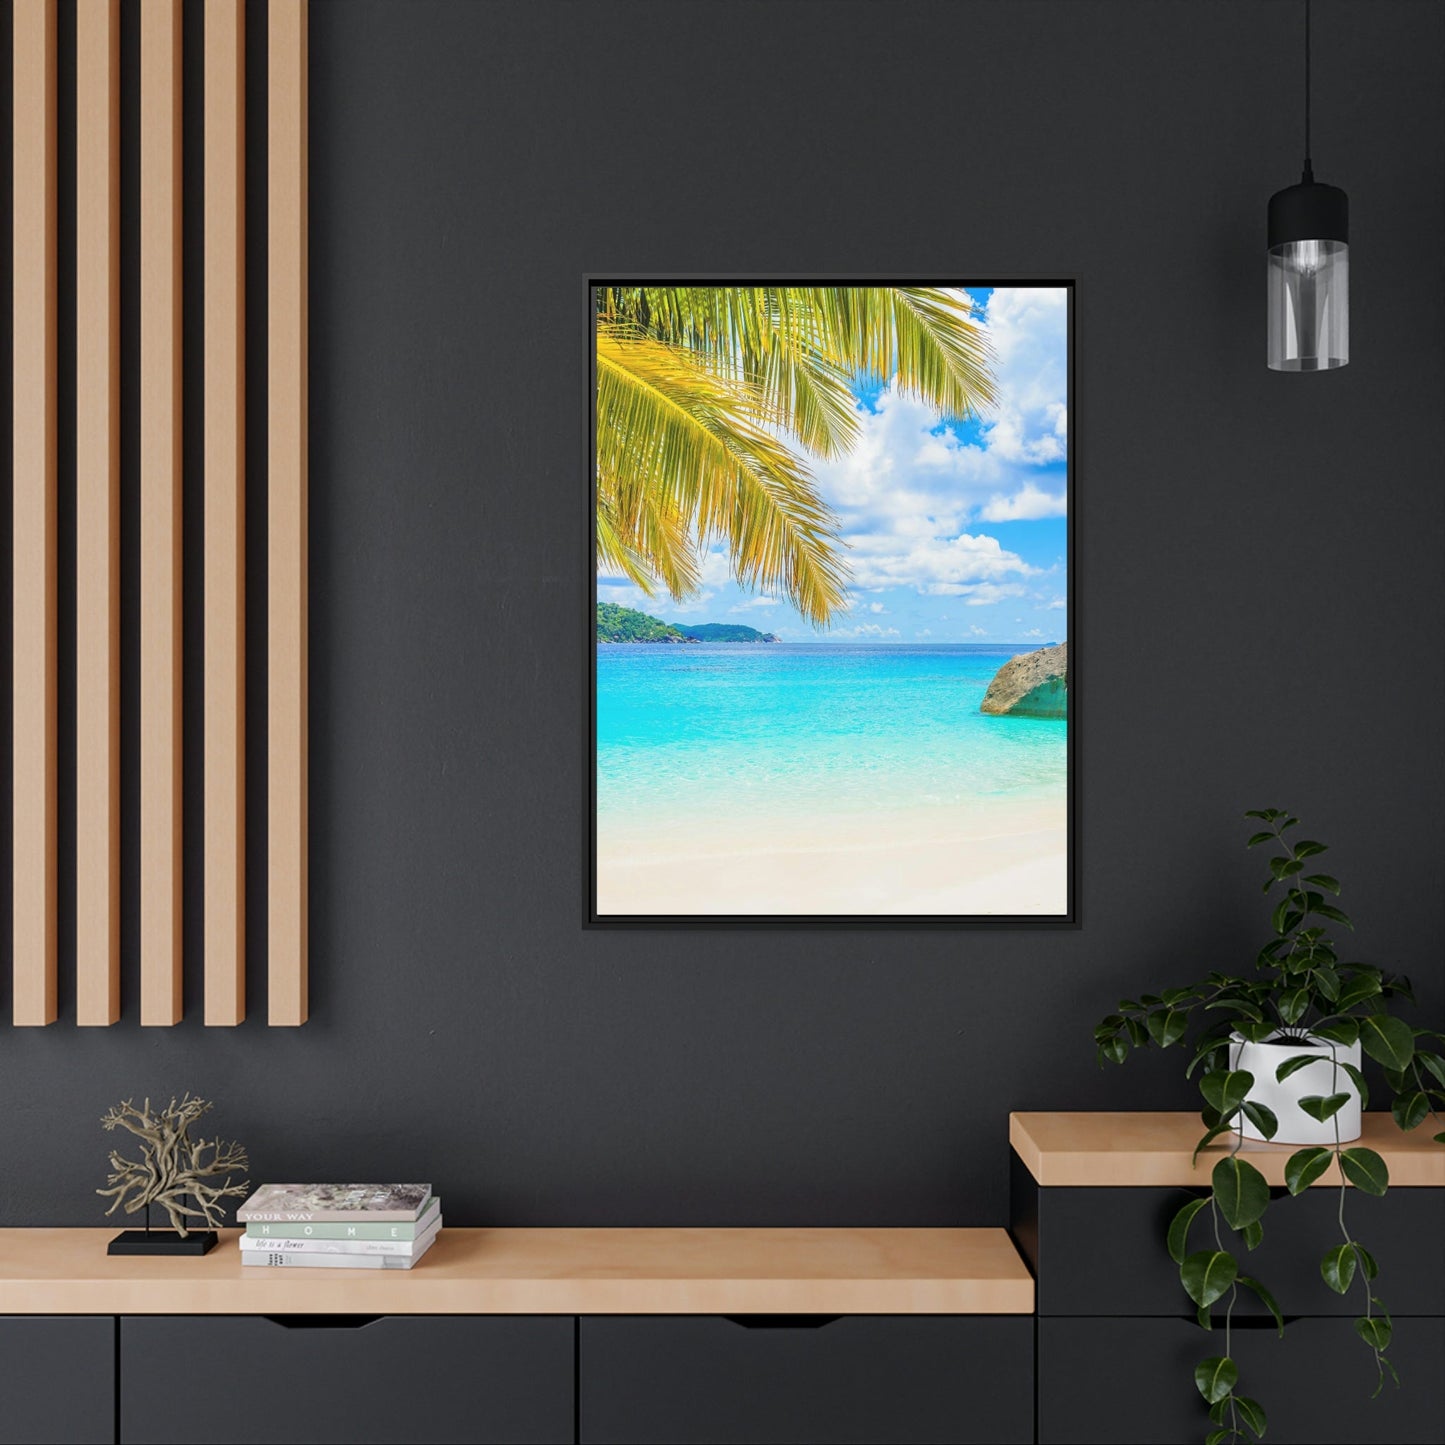 Seaside Splendor: Canvas Art of a Tranquil Island Beach Destination